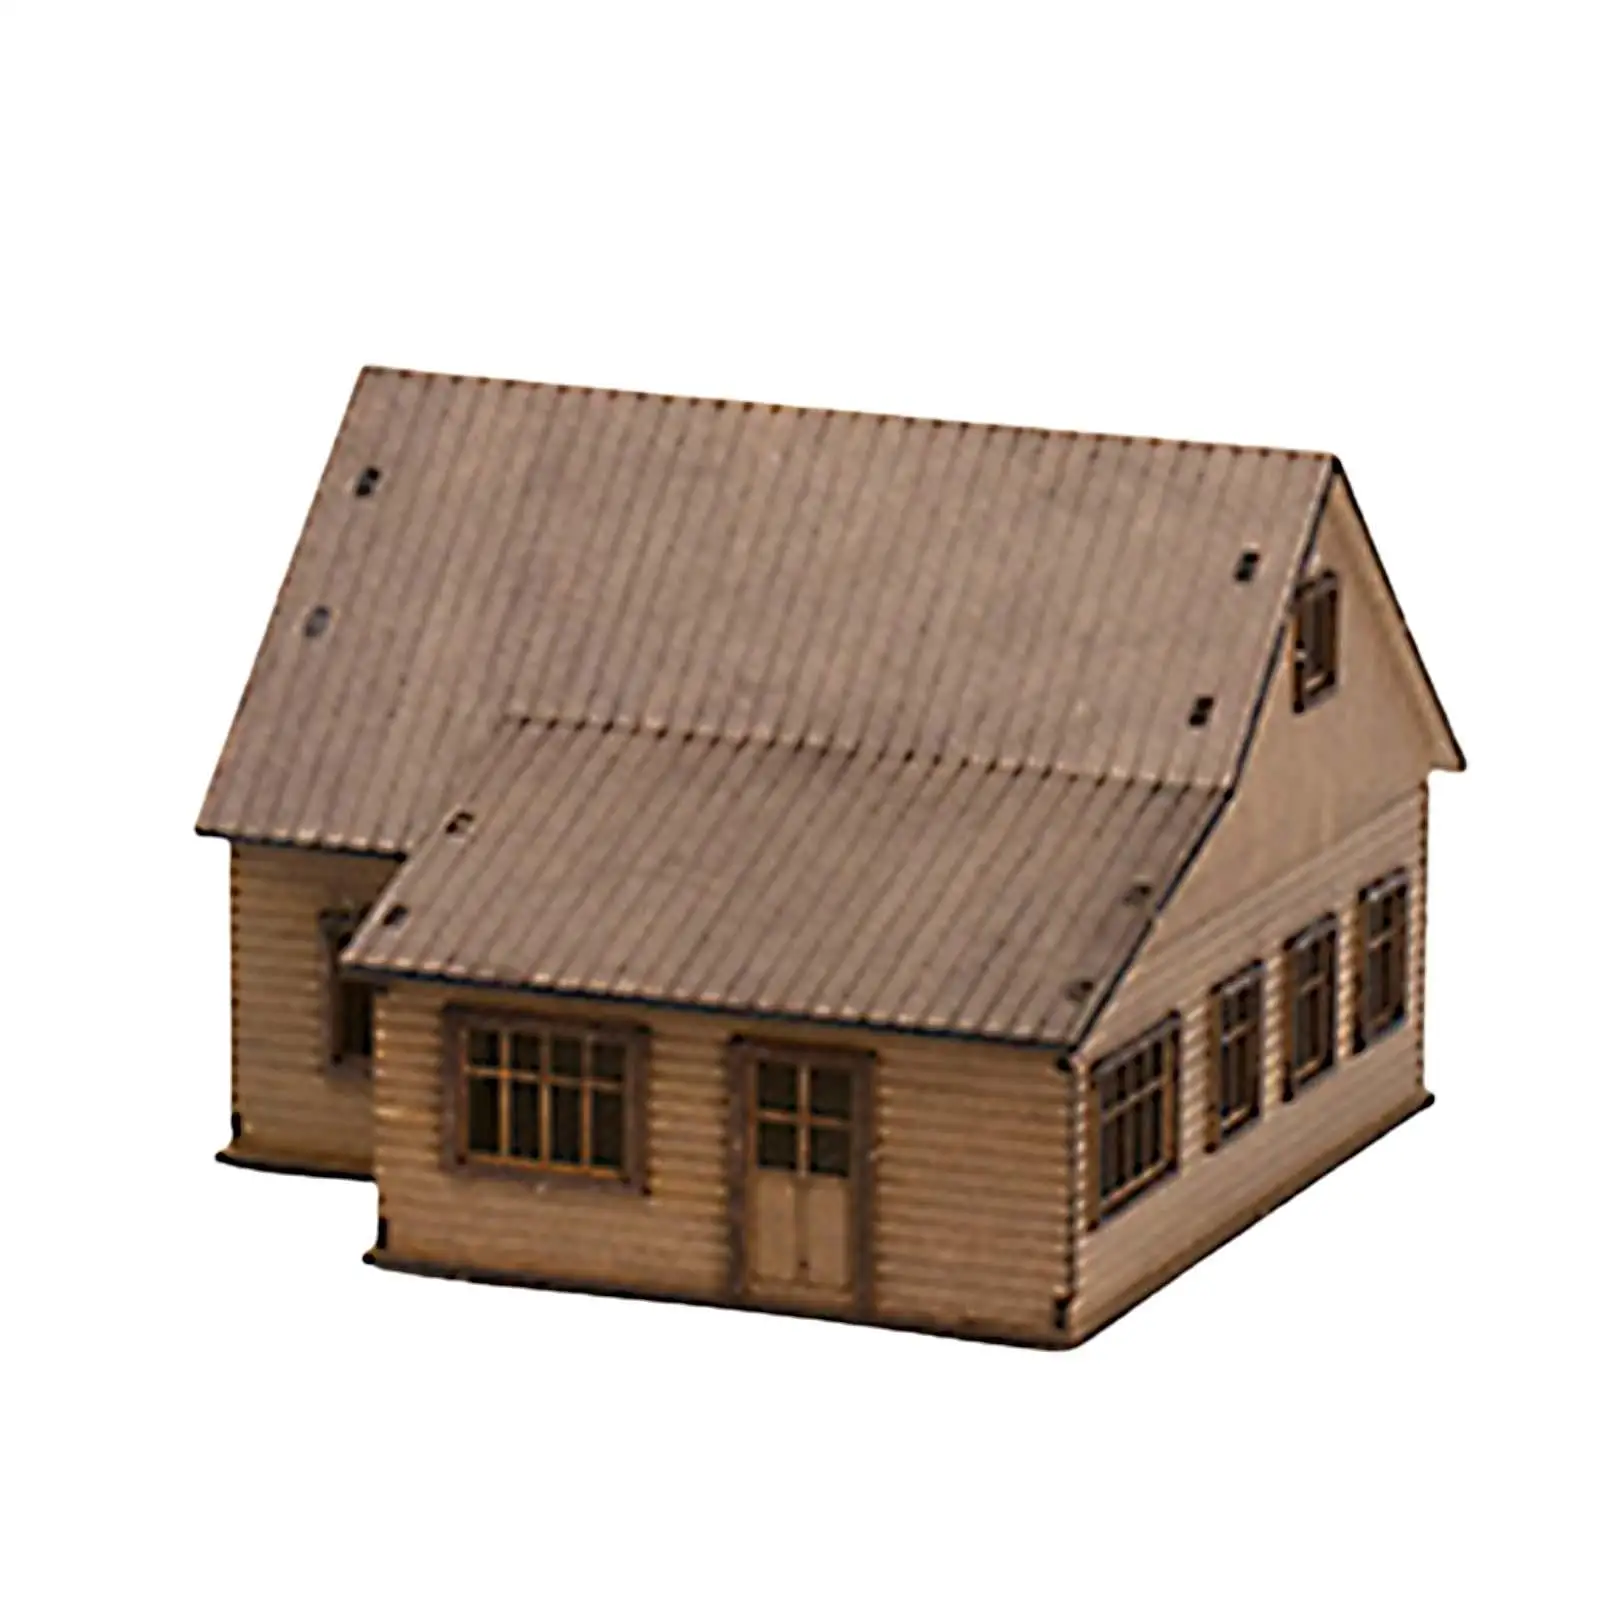 1:72 Diy European House DIY Crafts House Architecture Scene for Diorama Sand Table Micro Landscape Model Railway Decor